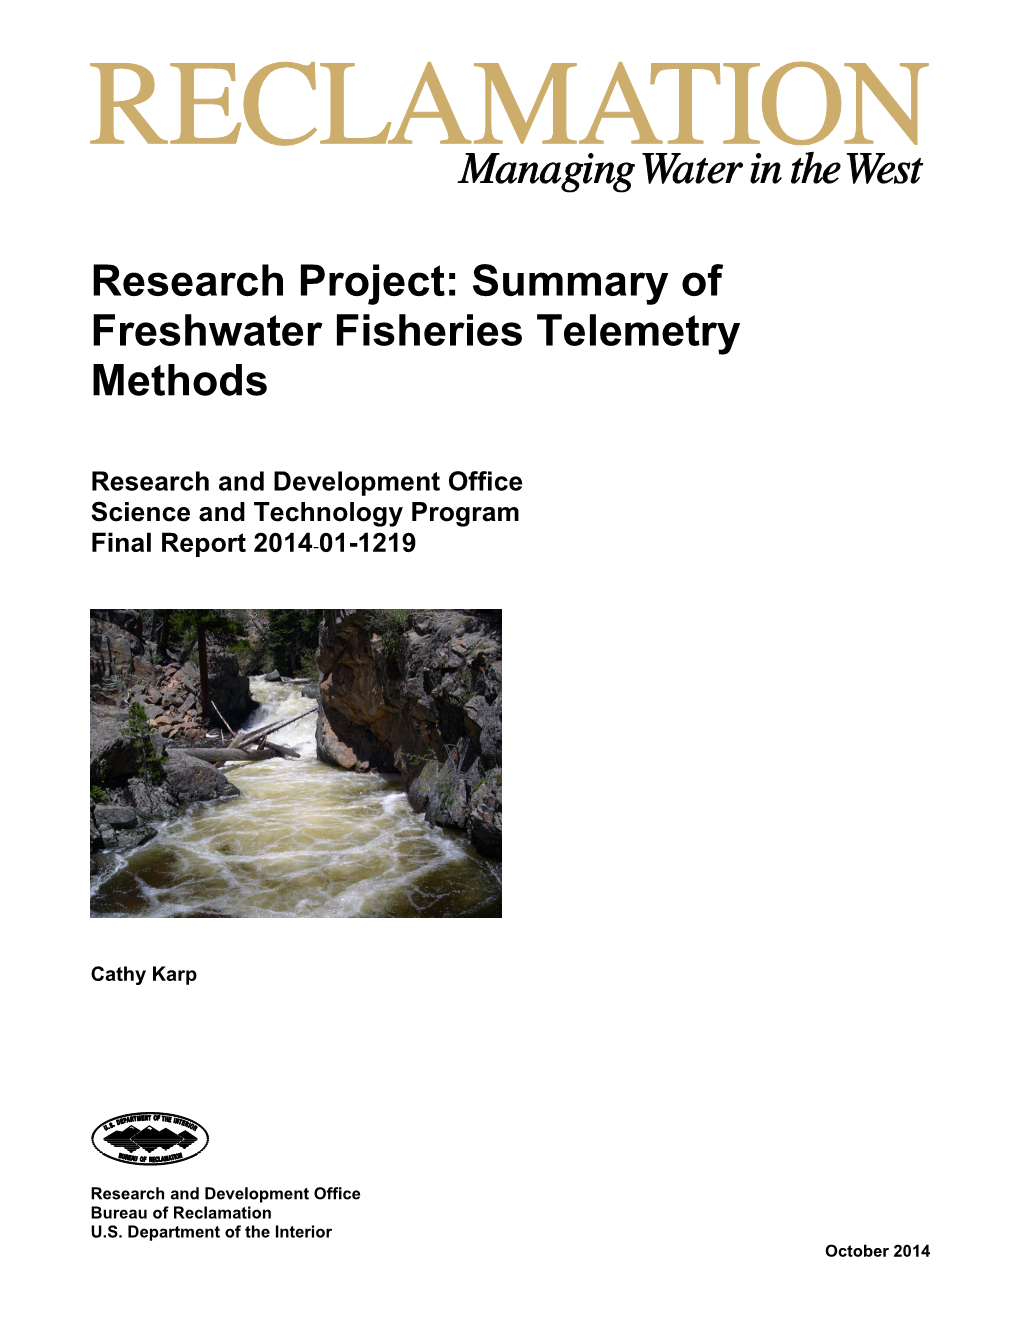 Summary of Freshwater Fisheries Telemetry Methods